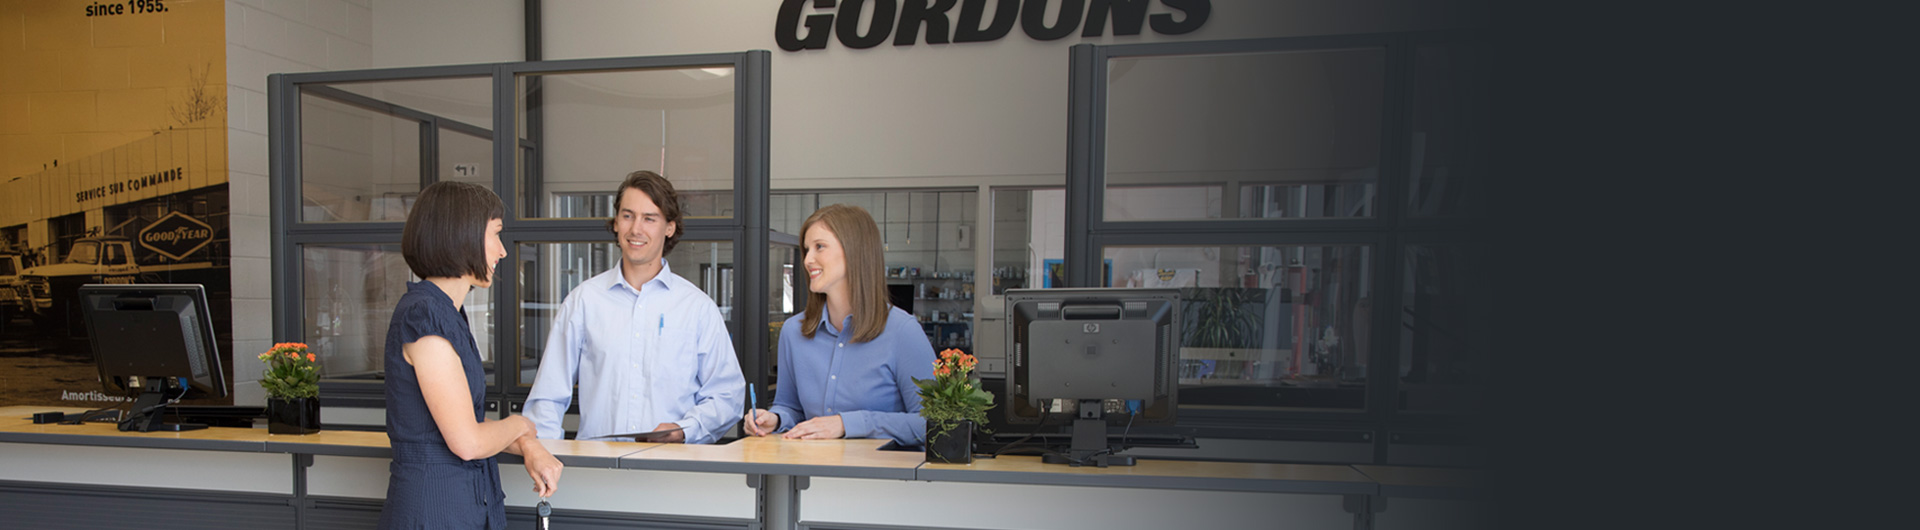 Gordons Reception